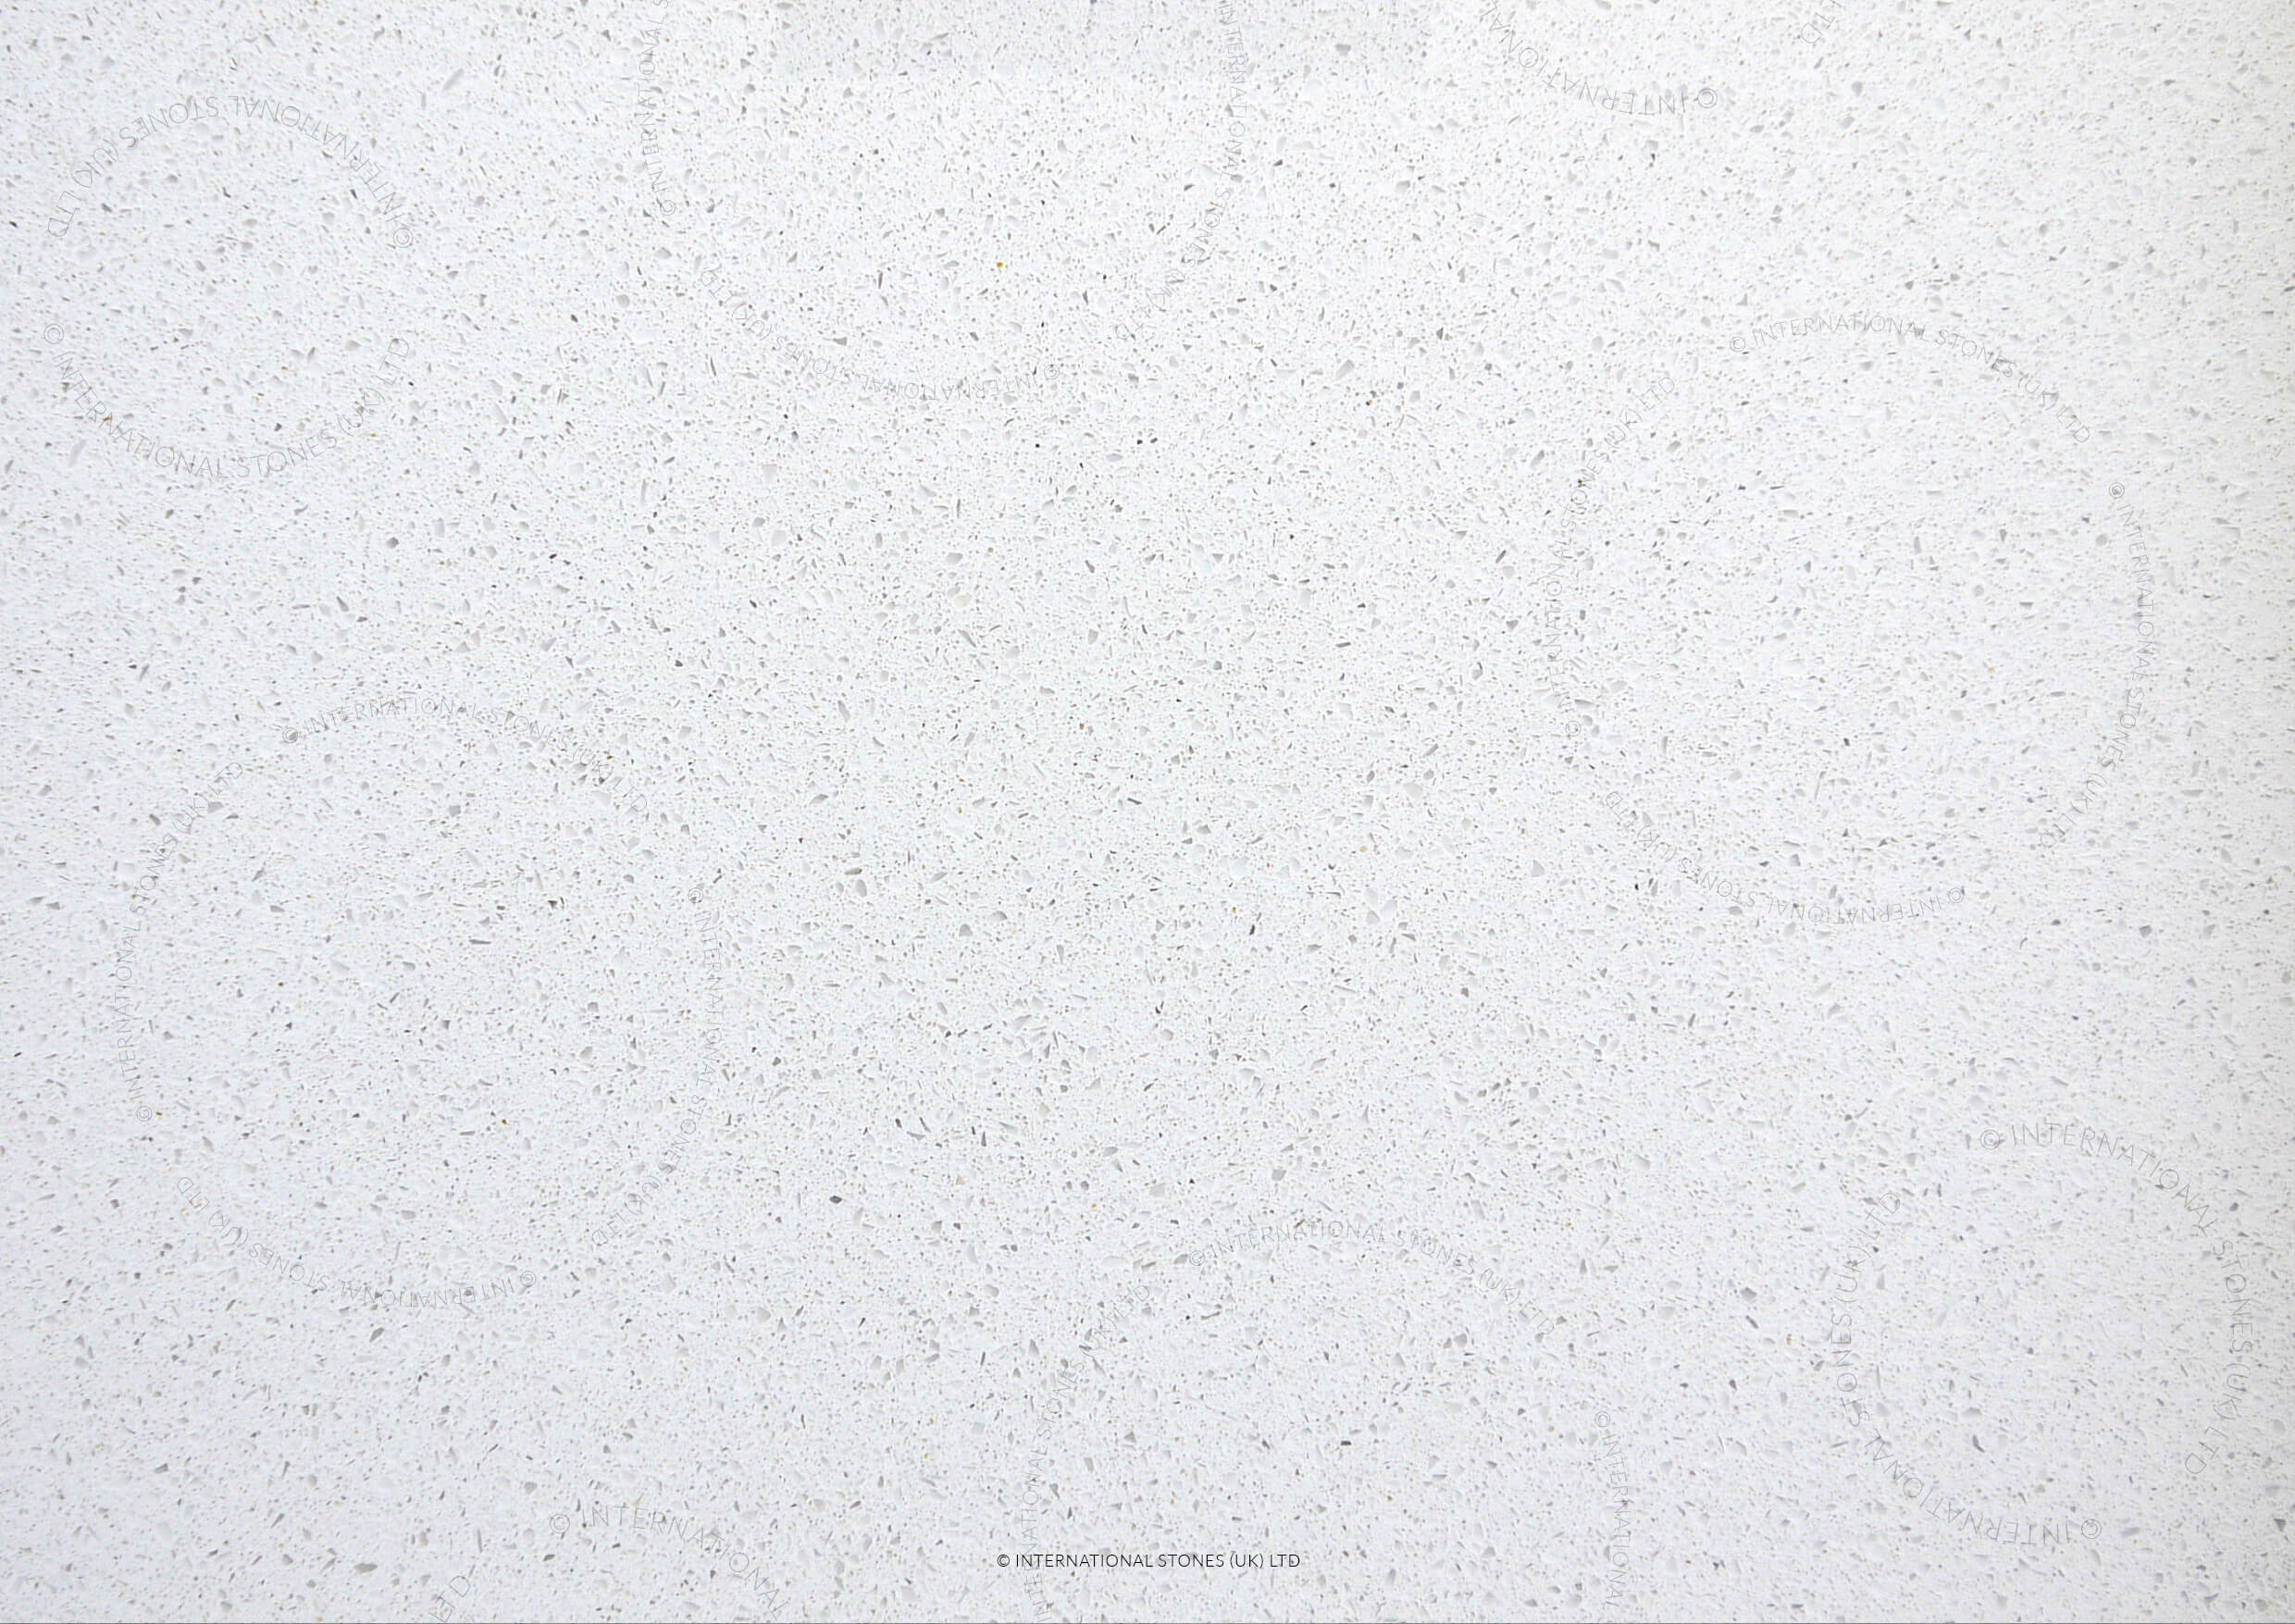 International Stone IQ Blanco Maple - ipswitch - Brightlingsea